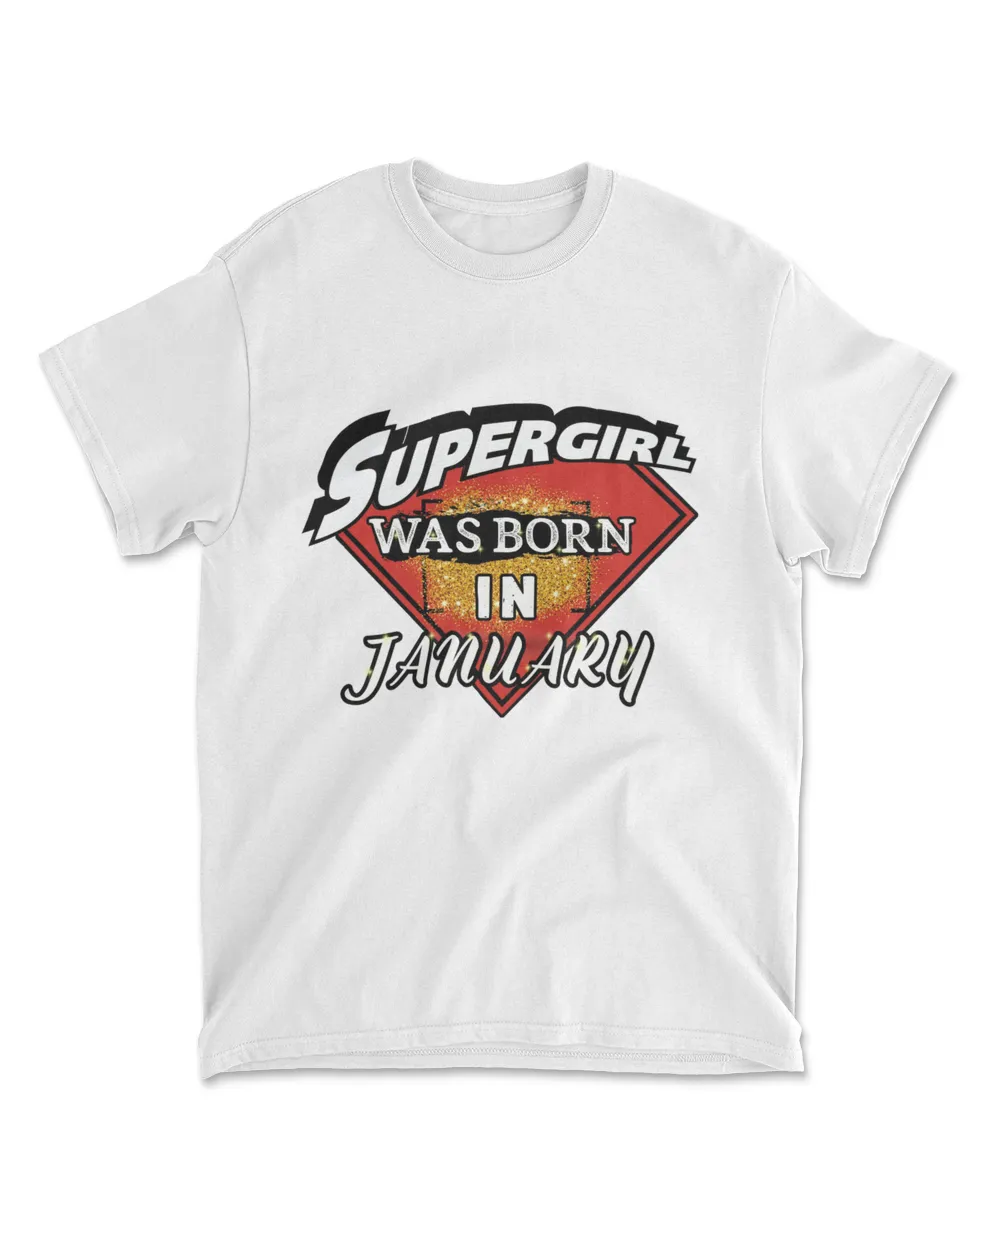 Super Girl Was Born In Jan